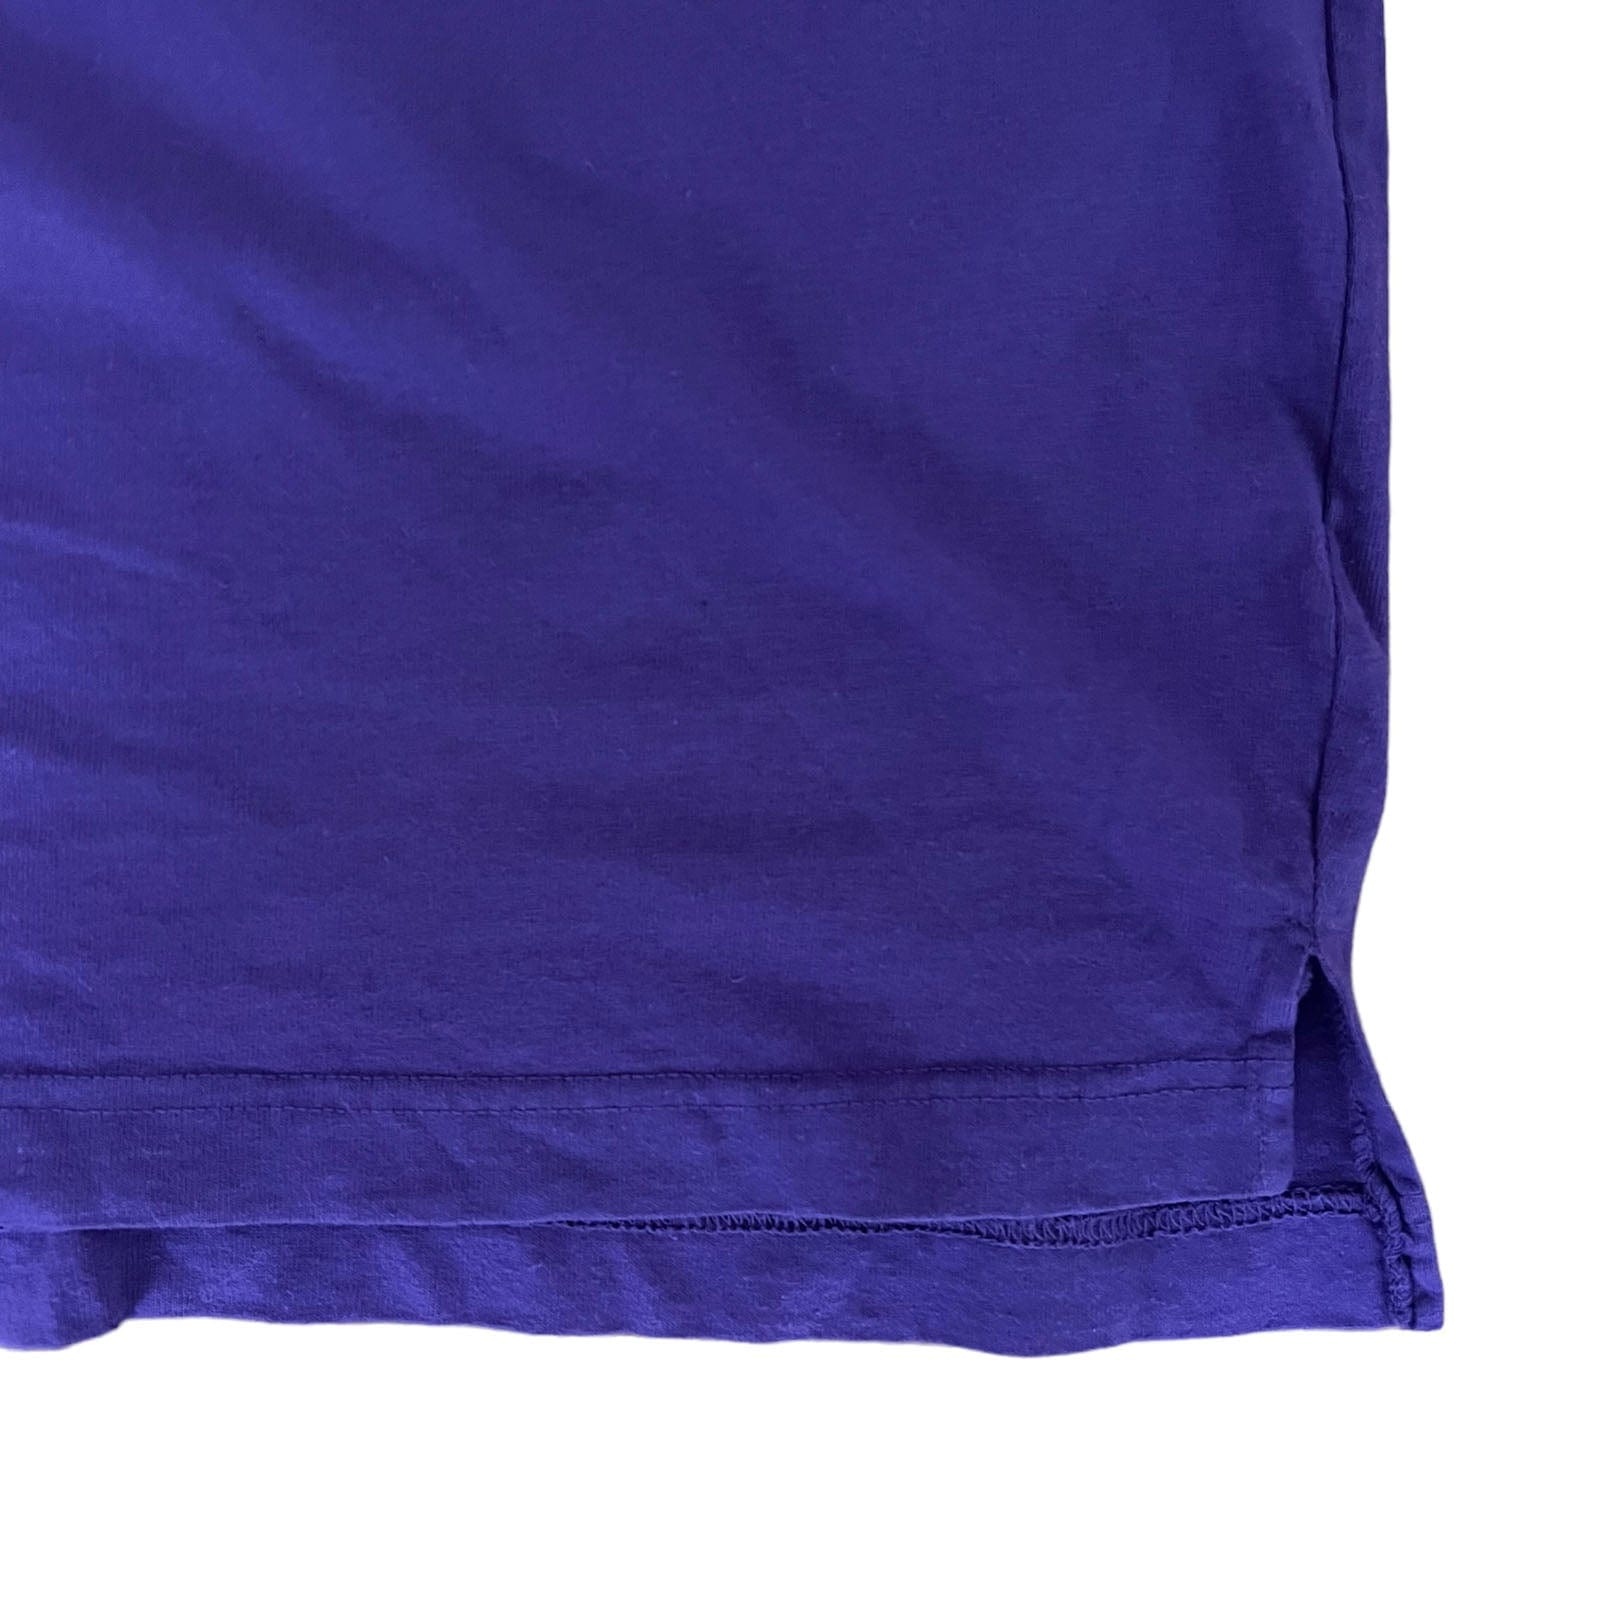 Skidz Shirts & Tops 1992 Long Sleeve Shirt - Purple